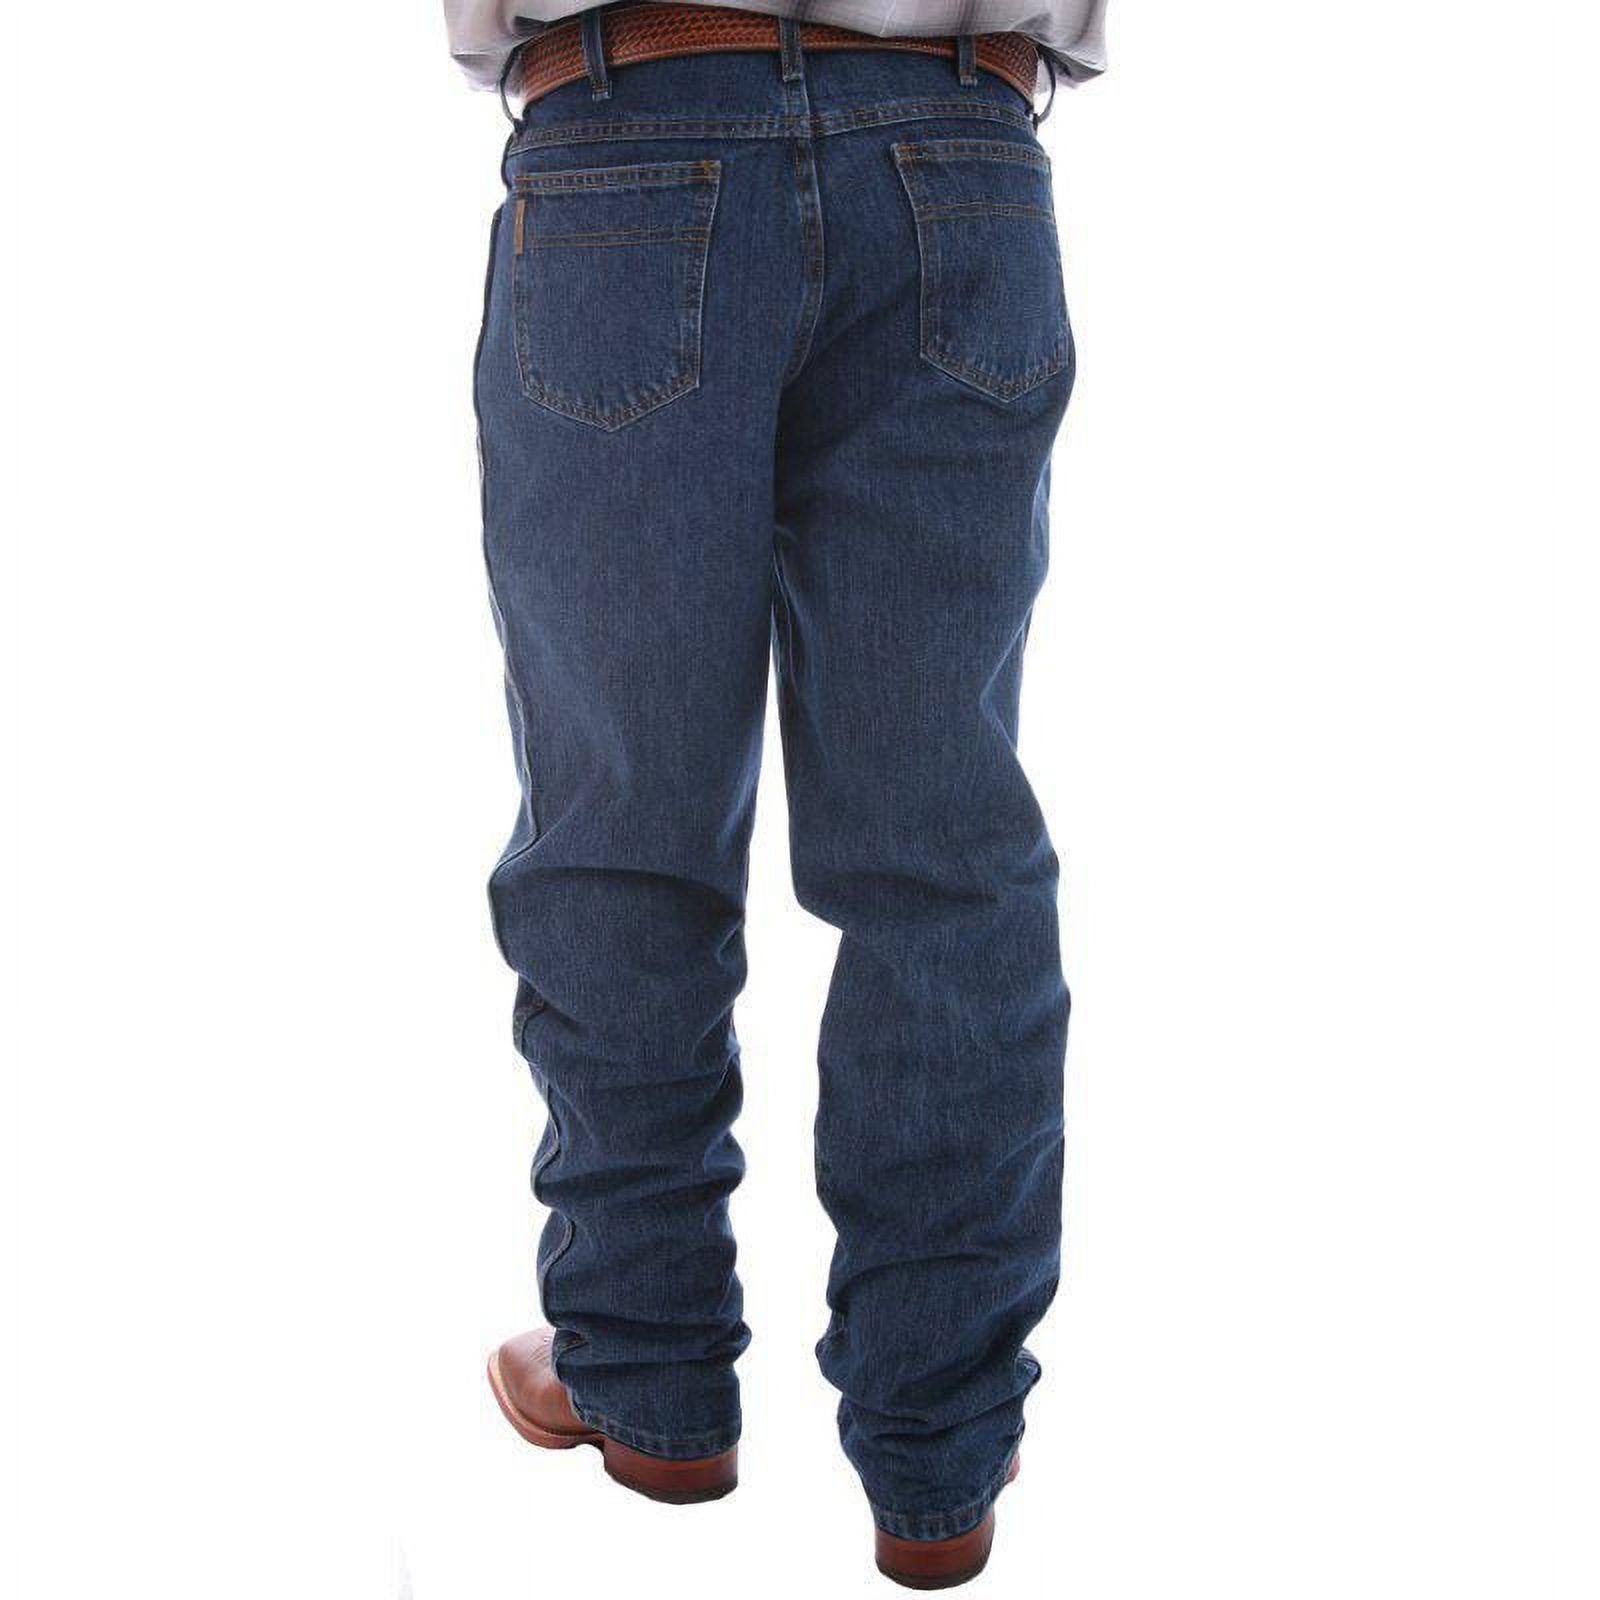 Cinch Apparel Mens Green Label Original Fit Jeans 34x30 Dark Stonewash - image 1 of 4